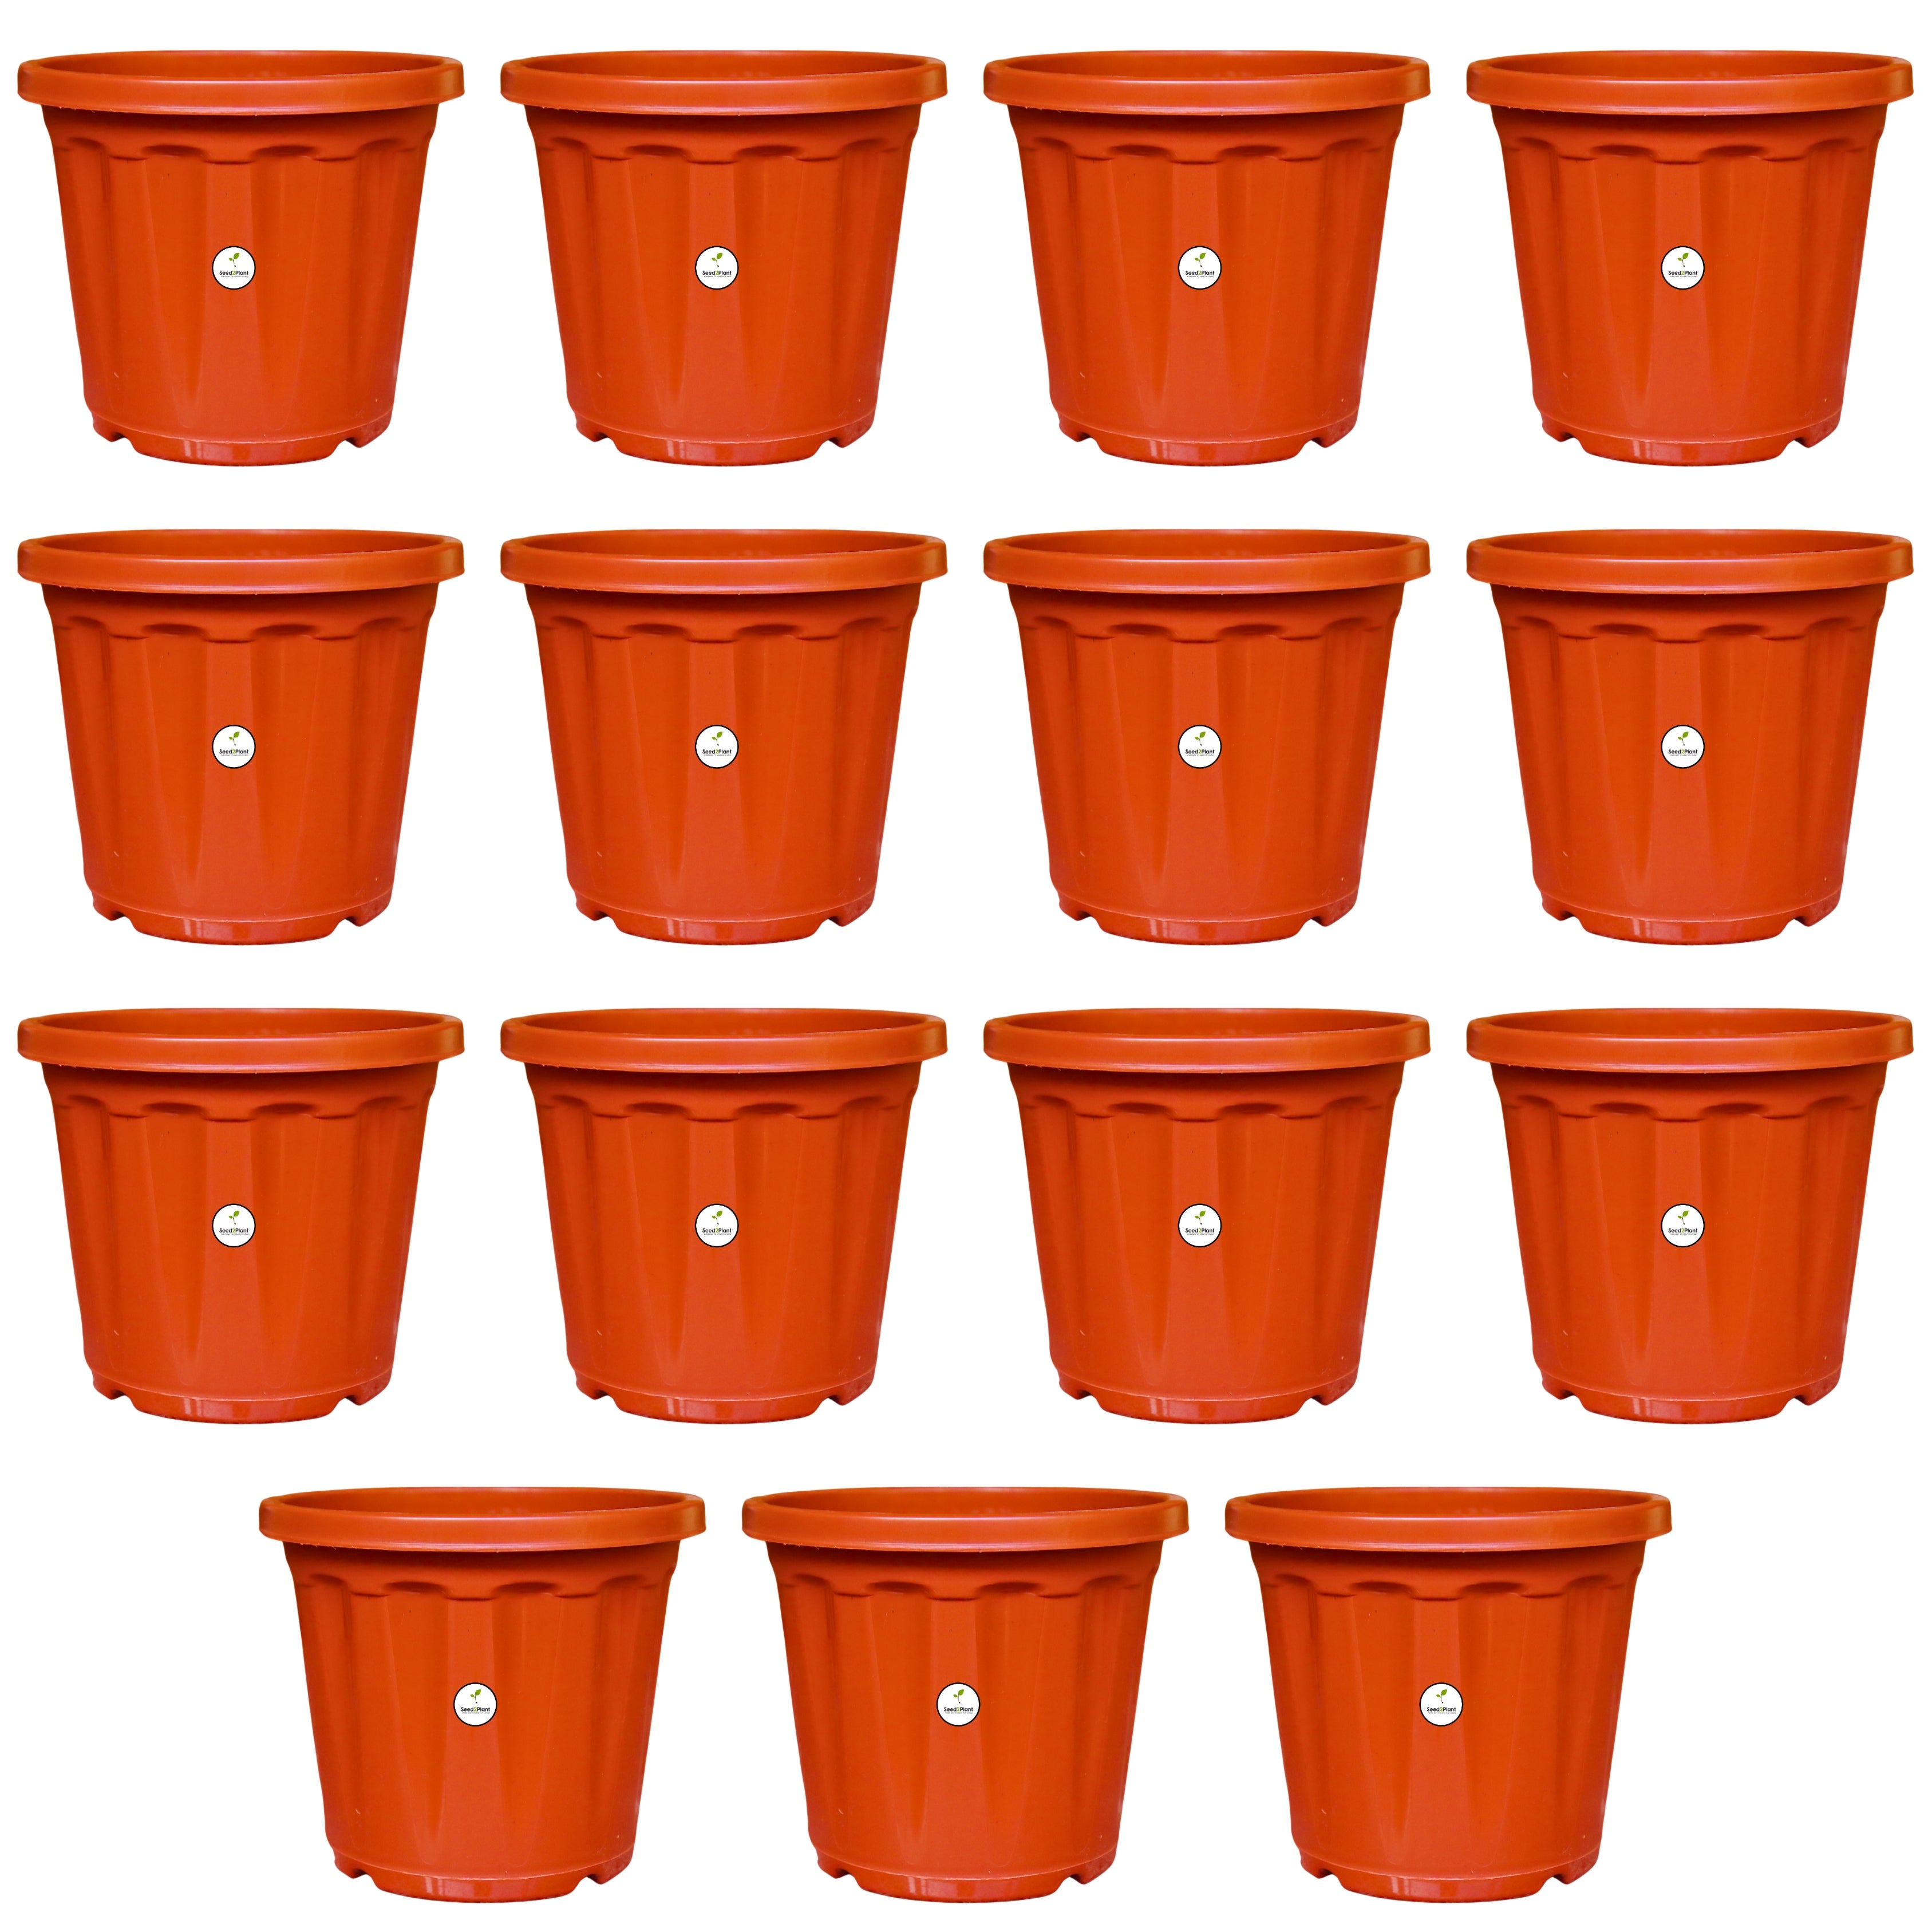 7 Inch Plastic Pot / Planter - Terracotta Colour